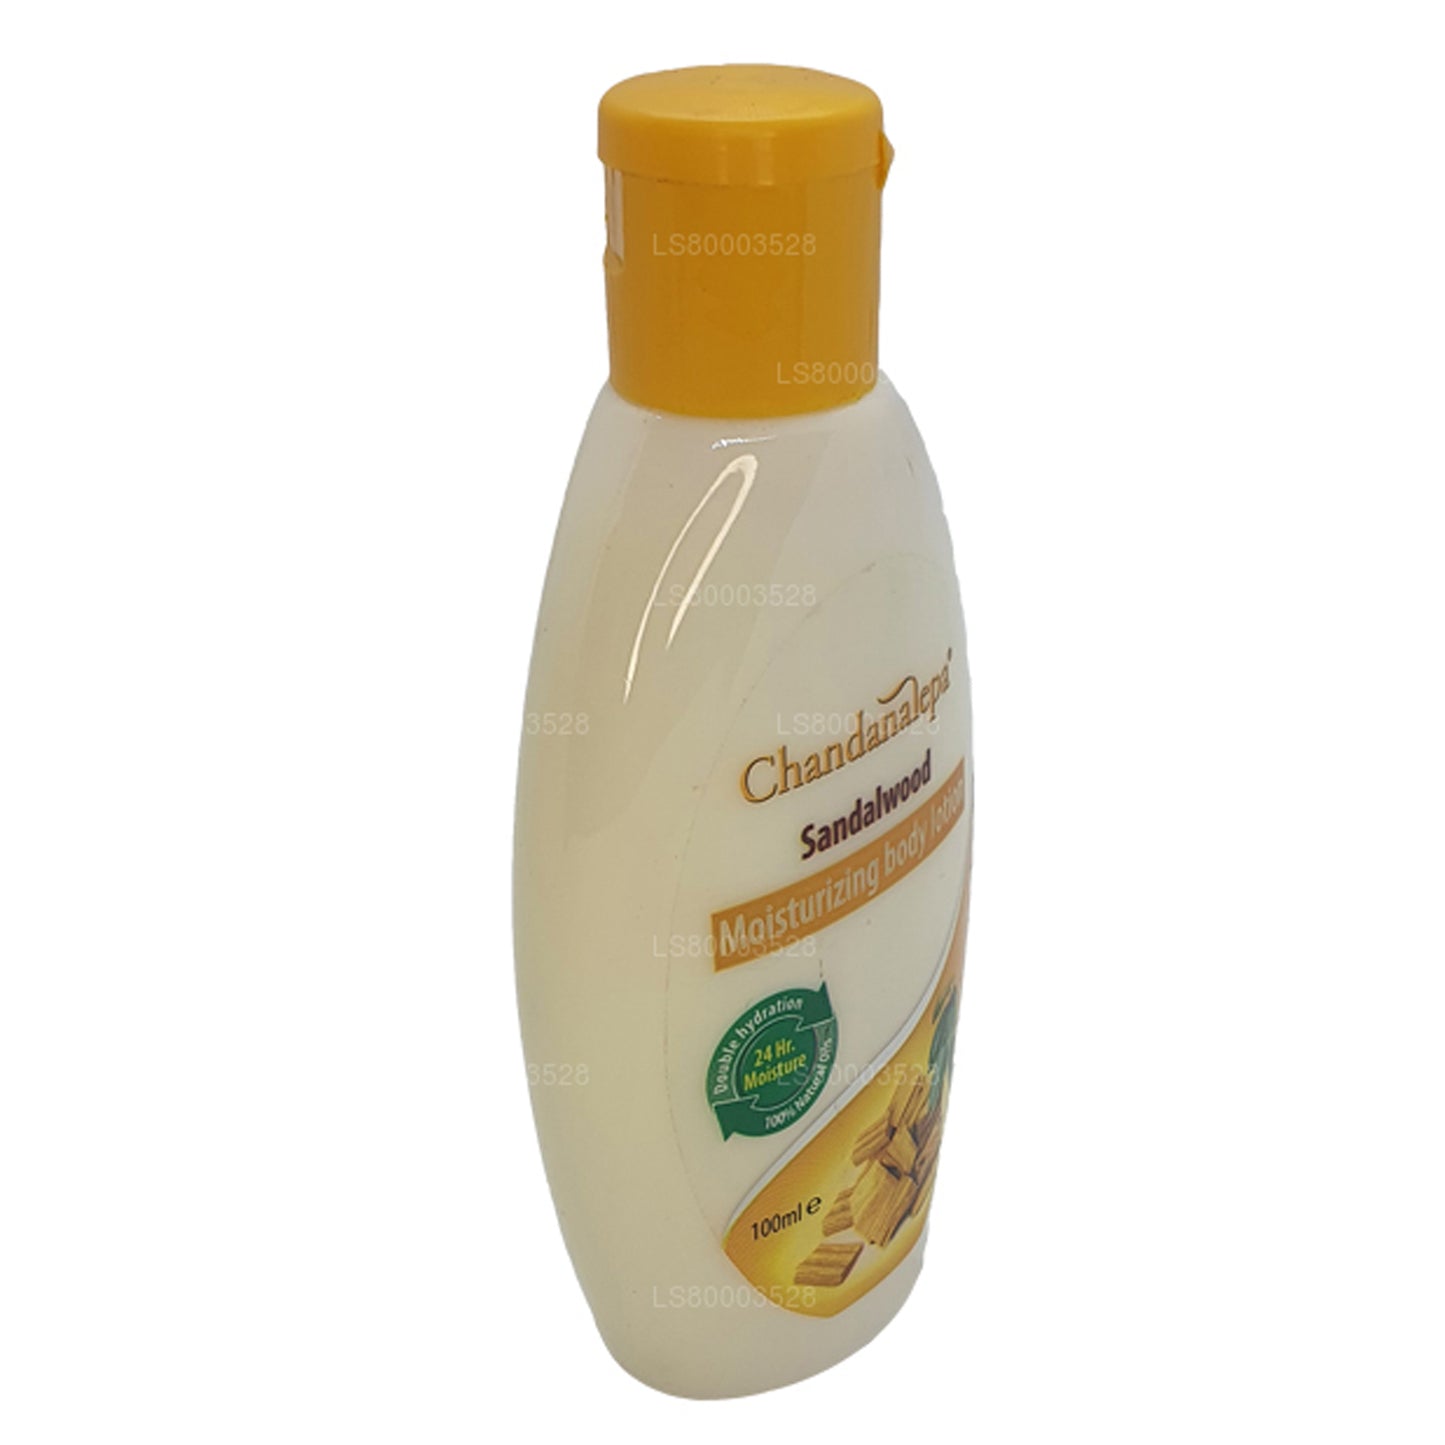 Chandanalepa sandeltræ bodylotion (100 ml)